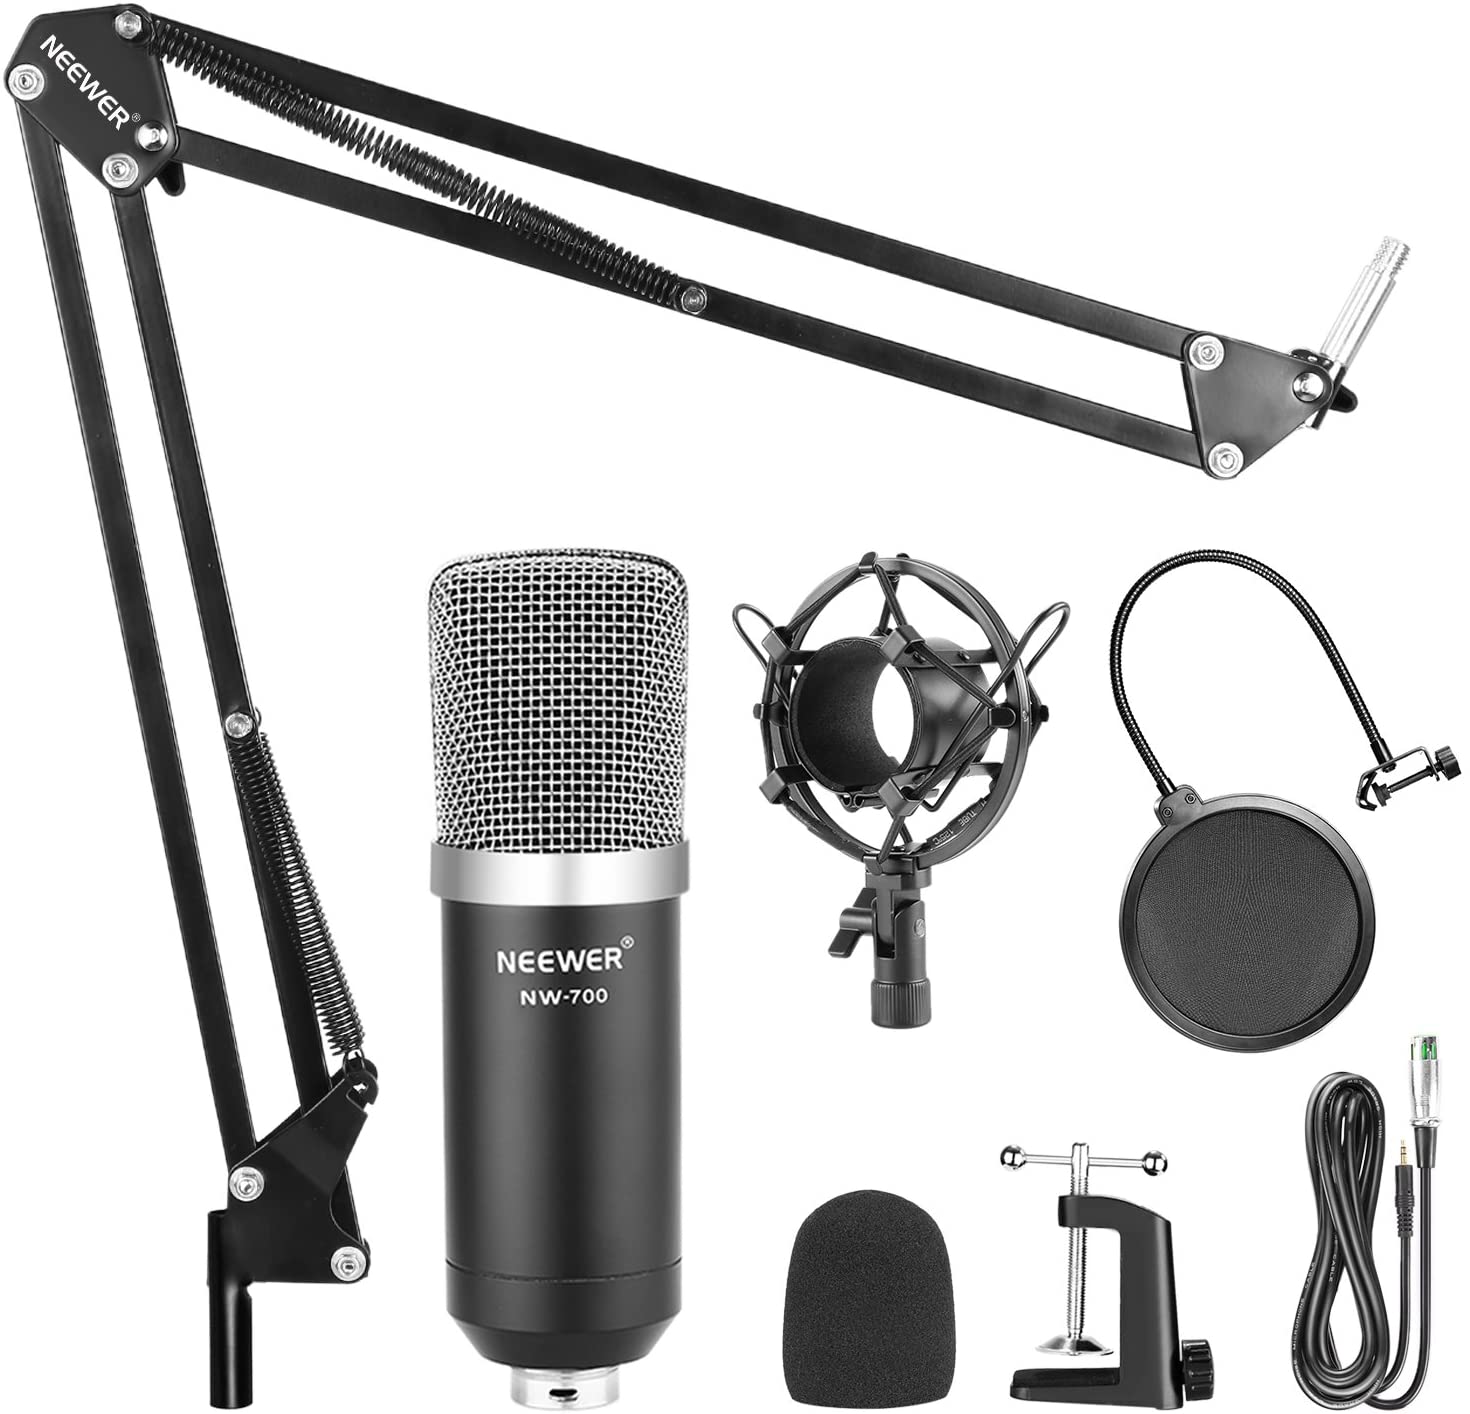 Neewer NW 700 professional studio broadcasting recording